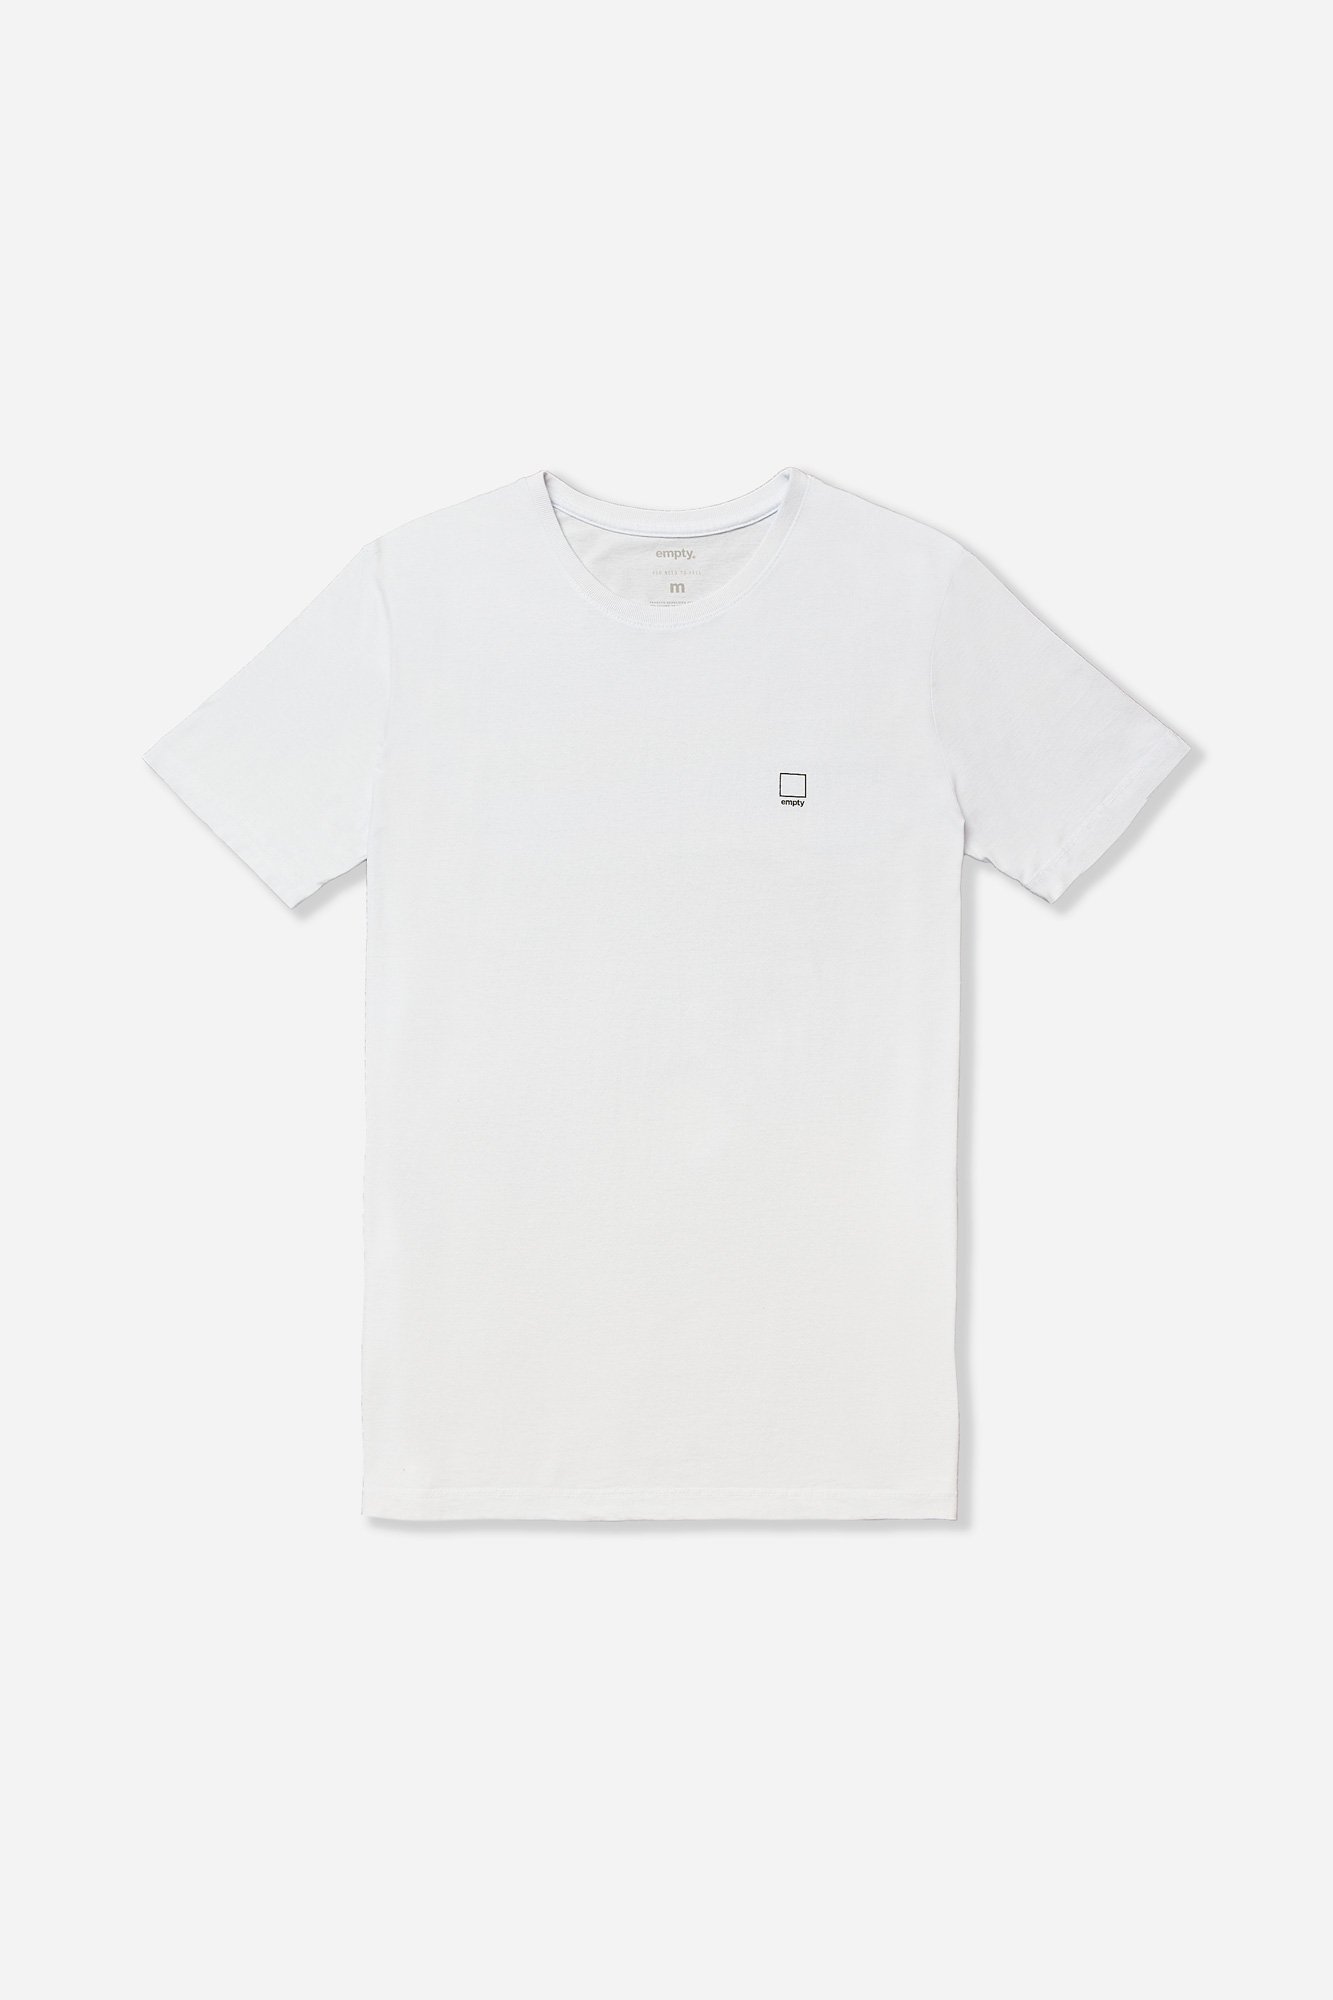 07 camiseta minico branco